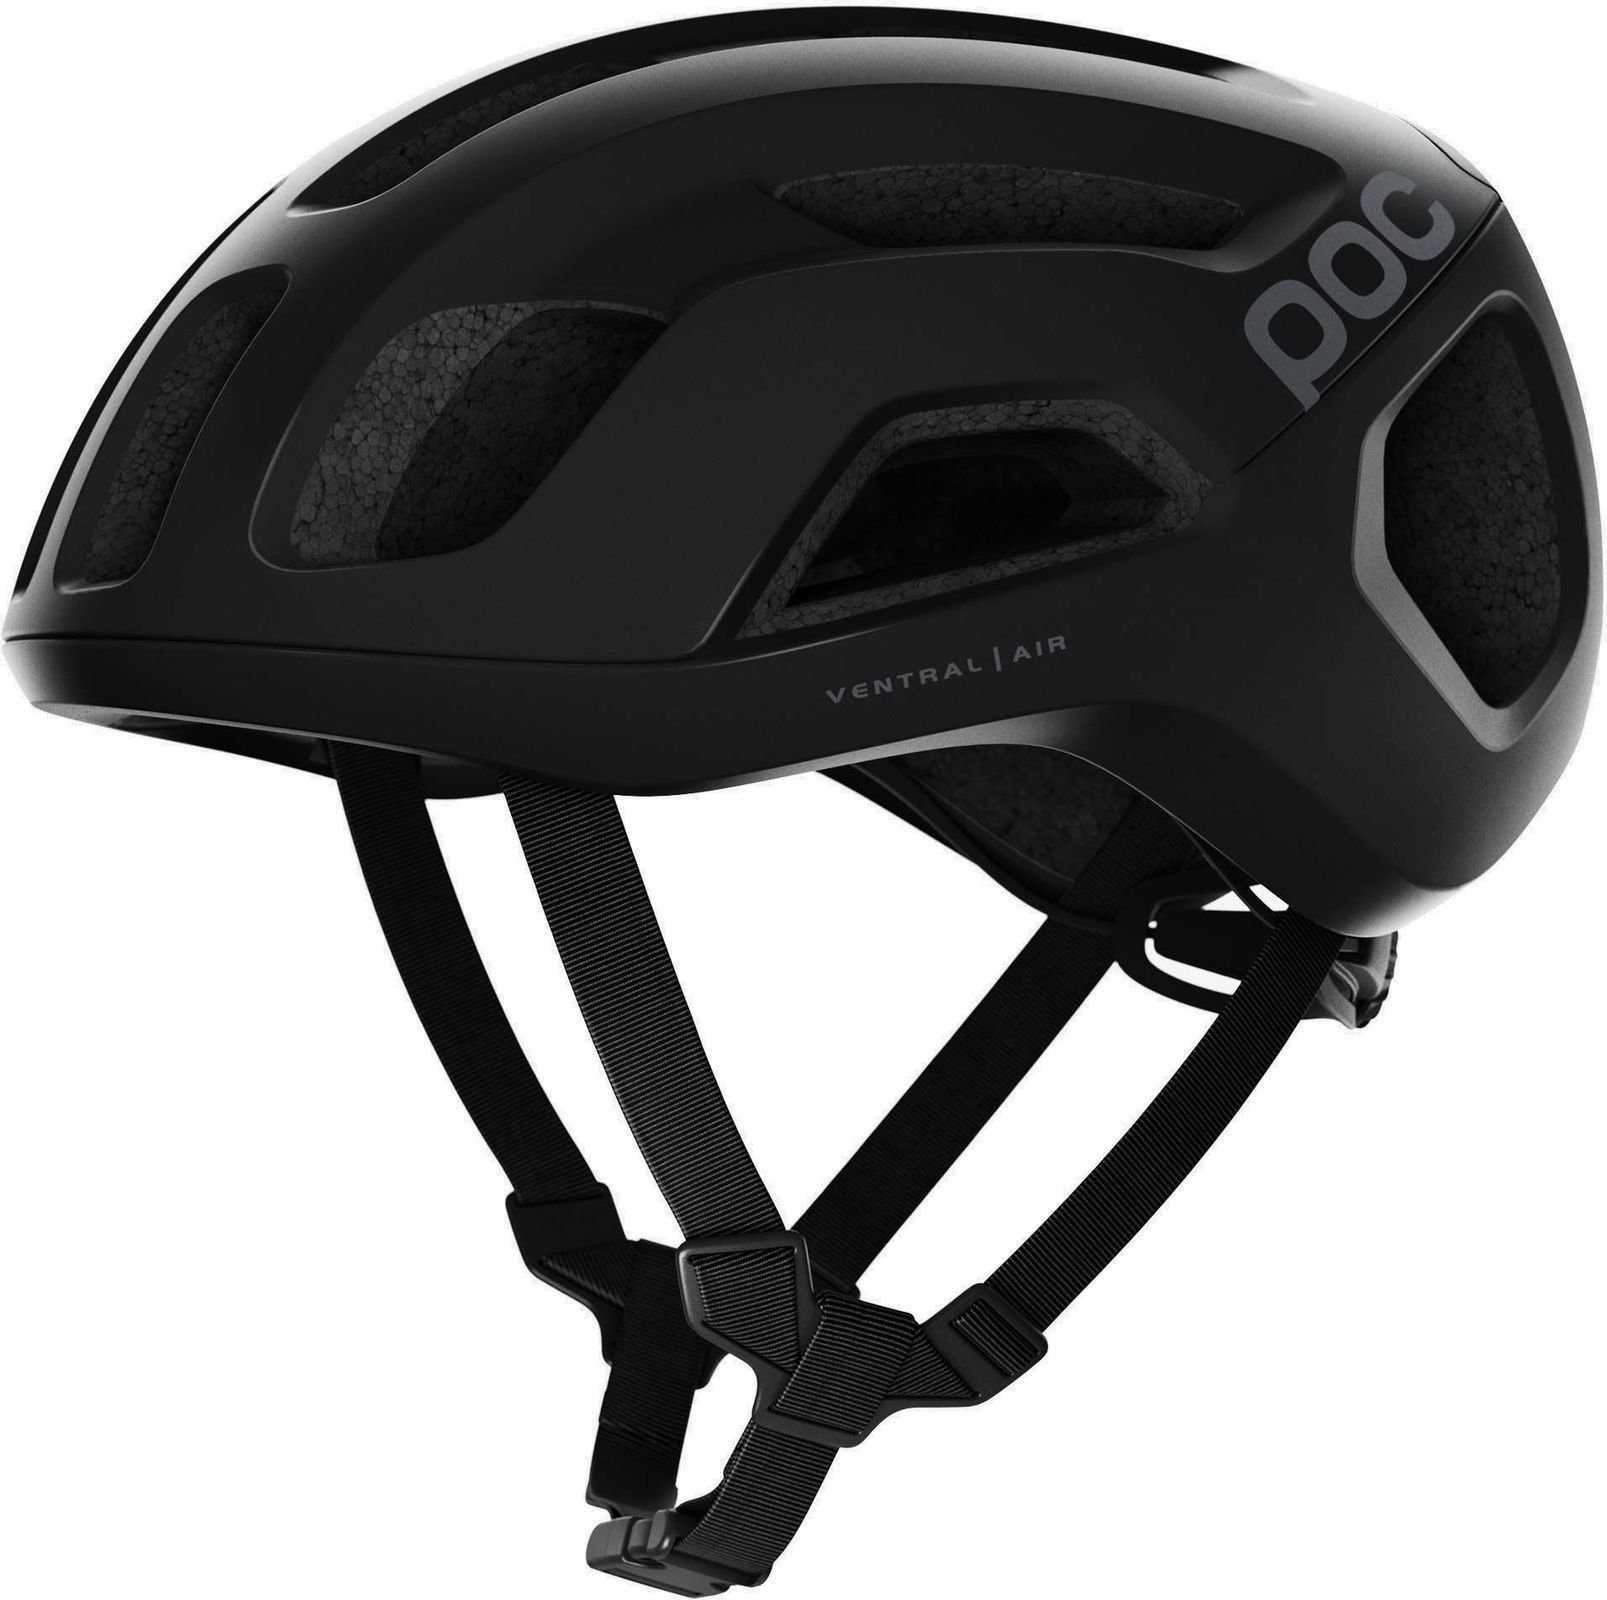 Bike Helmet POC Ventral AIR SPIN Uranium Black Matt 54-59 Bike Helmet